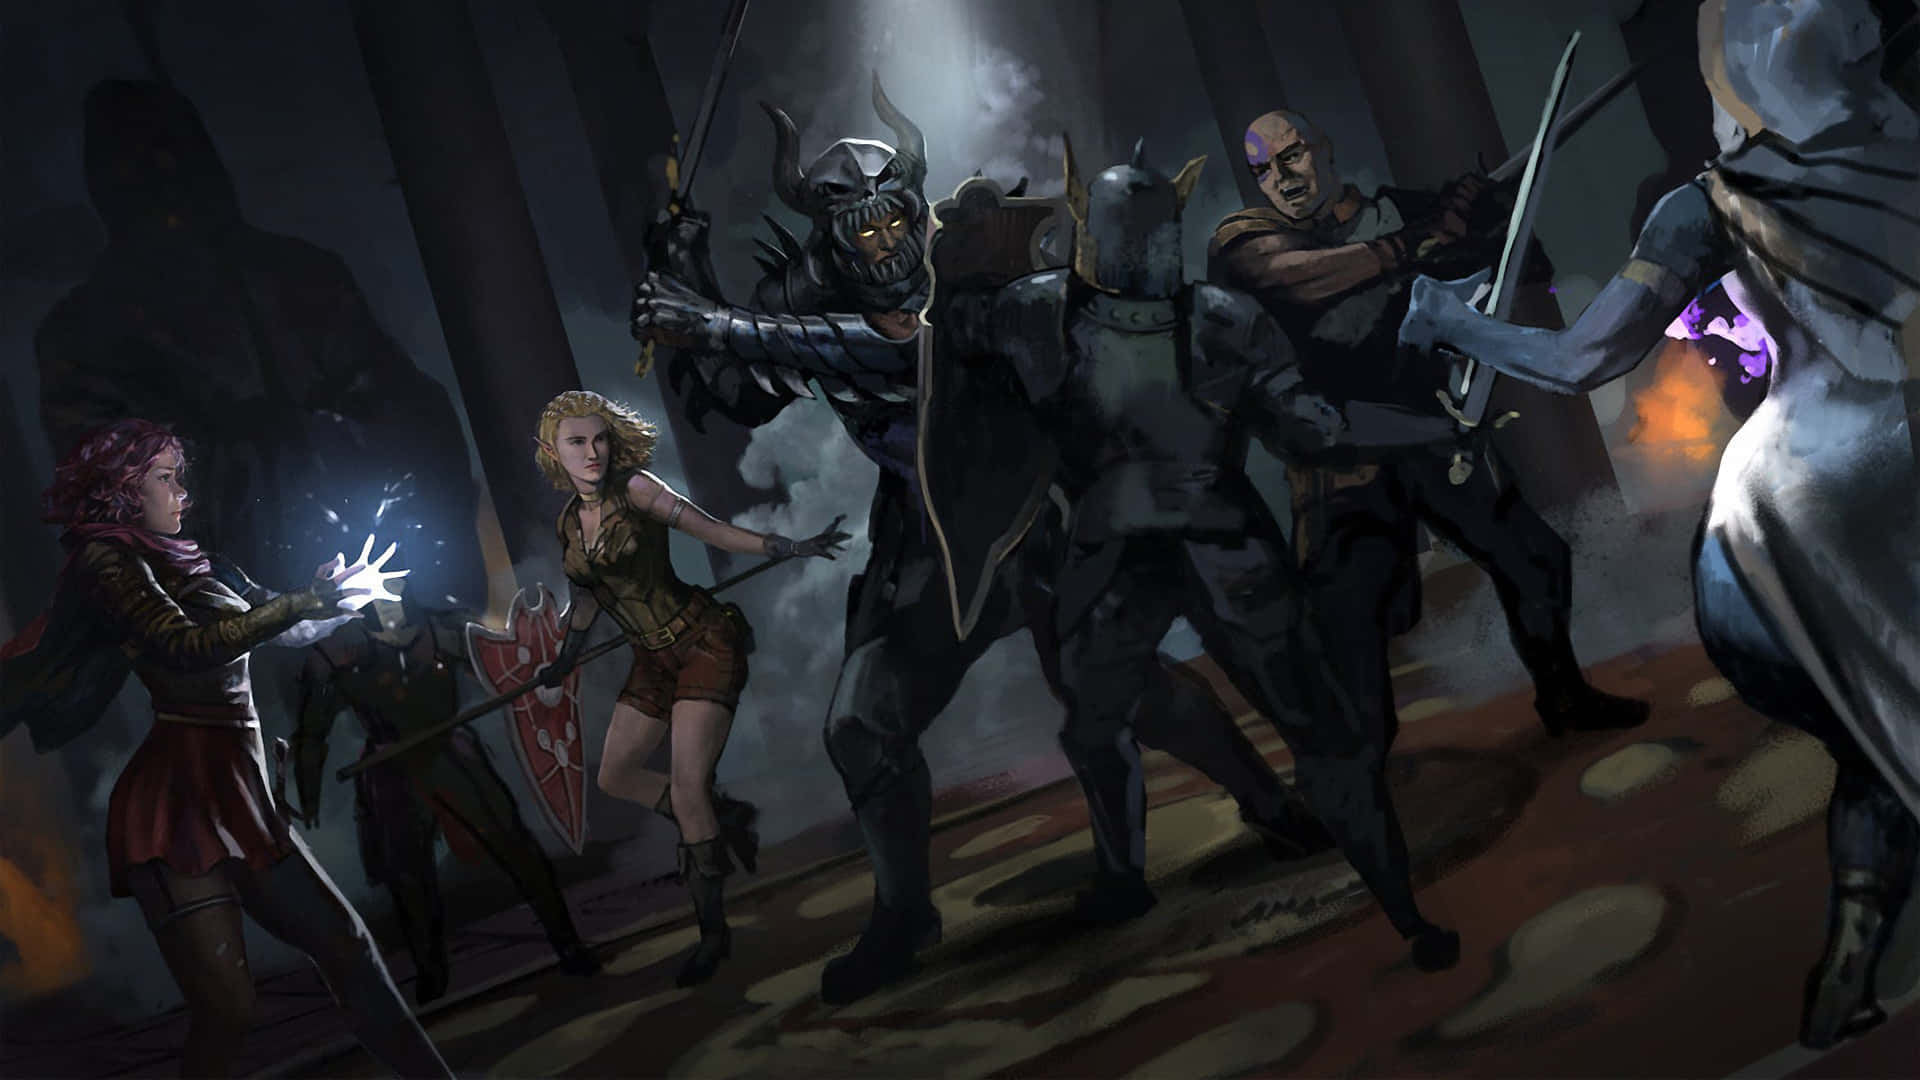 Dark Alliance - Adventurers fighting a monstrous threat Wallpaper